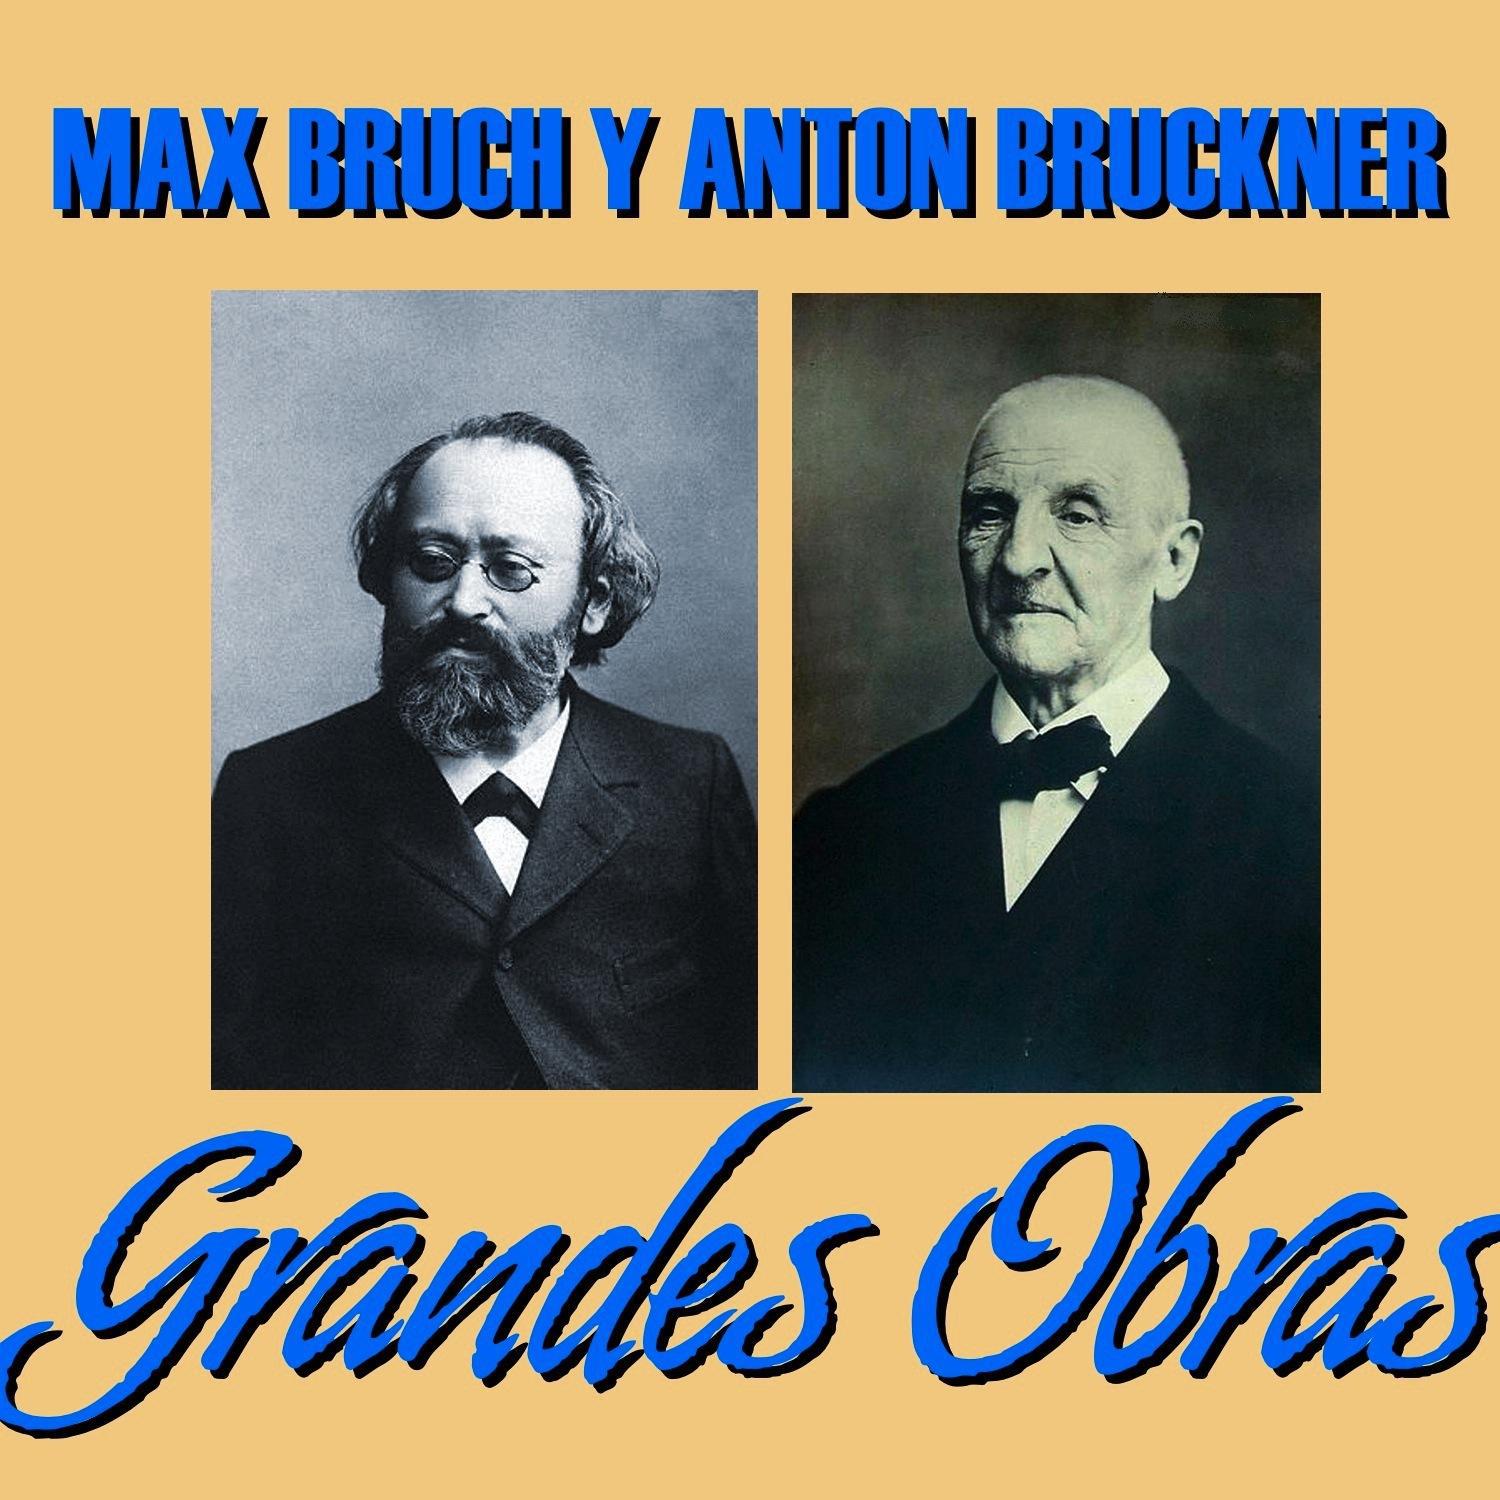 Max Bruch y Anton Bruckner Grandes Obras